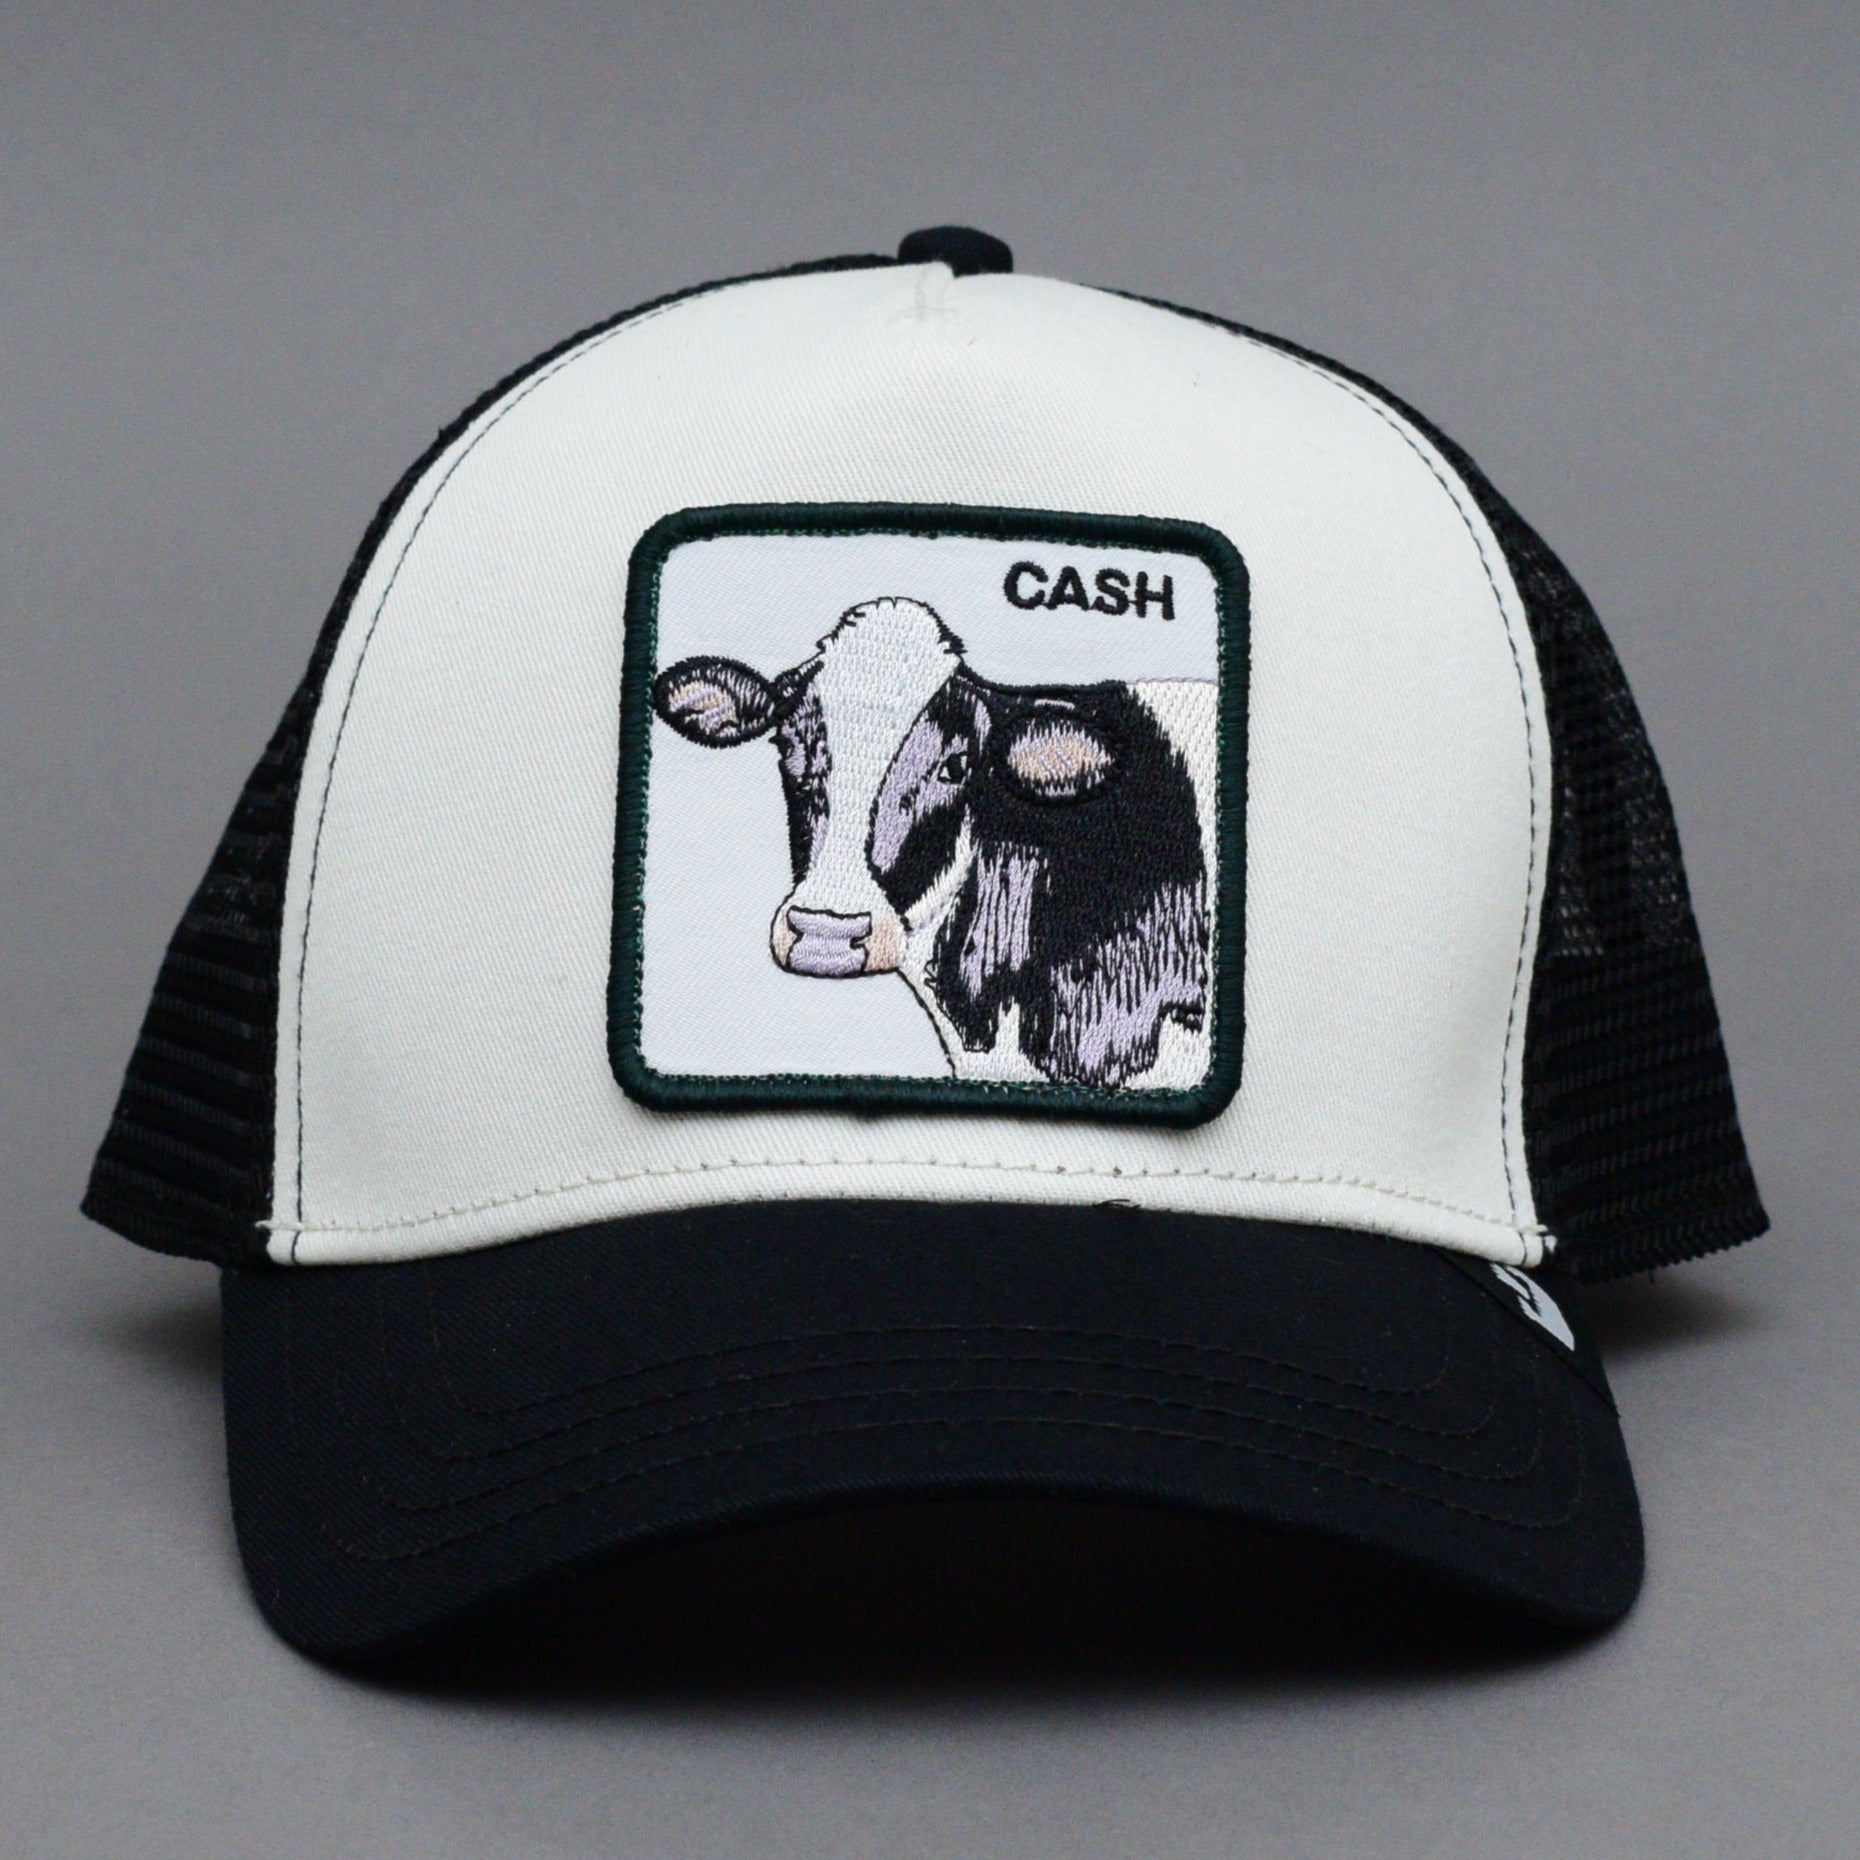 Goorin Bros - Cash Cow - Trucker/Snapback - Black/White